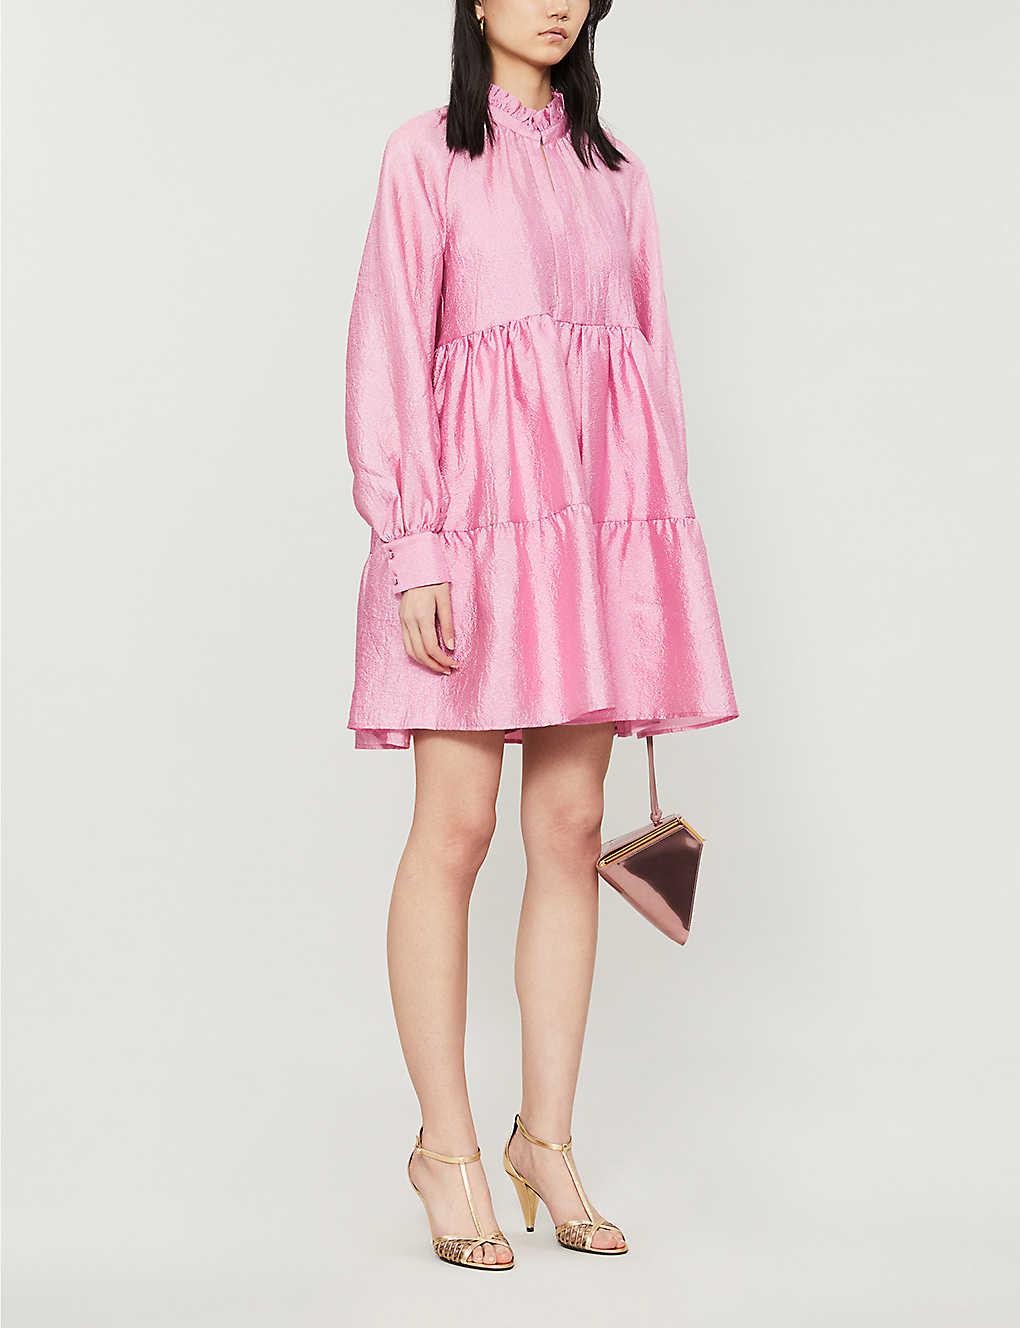 Stine Goya Jasmine Tiered Cloqué Mini Dress in Pink - Lyst